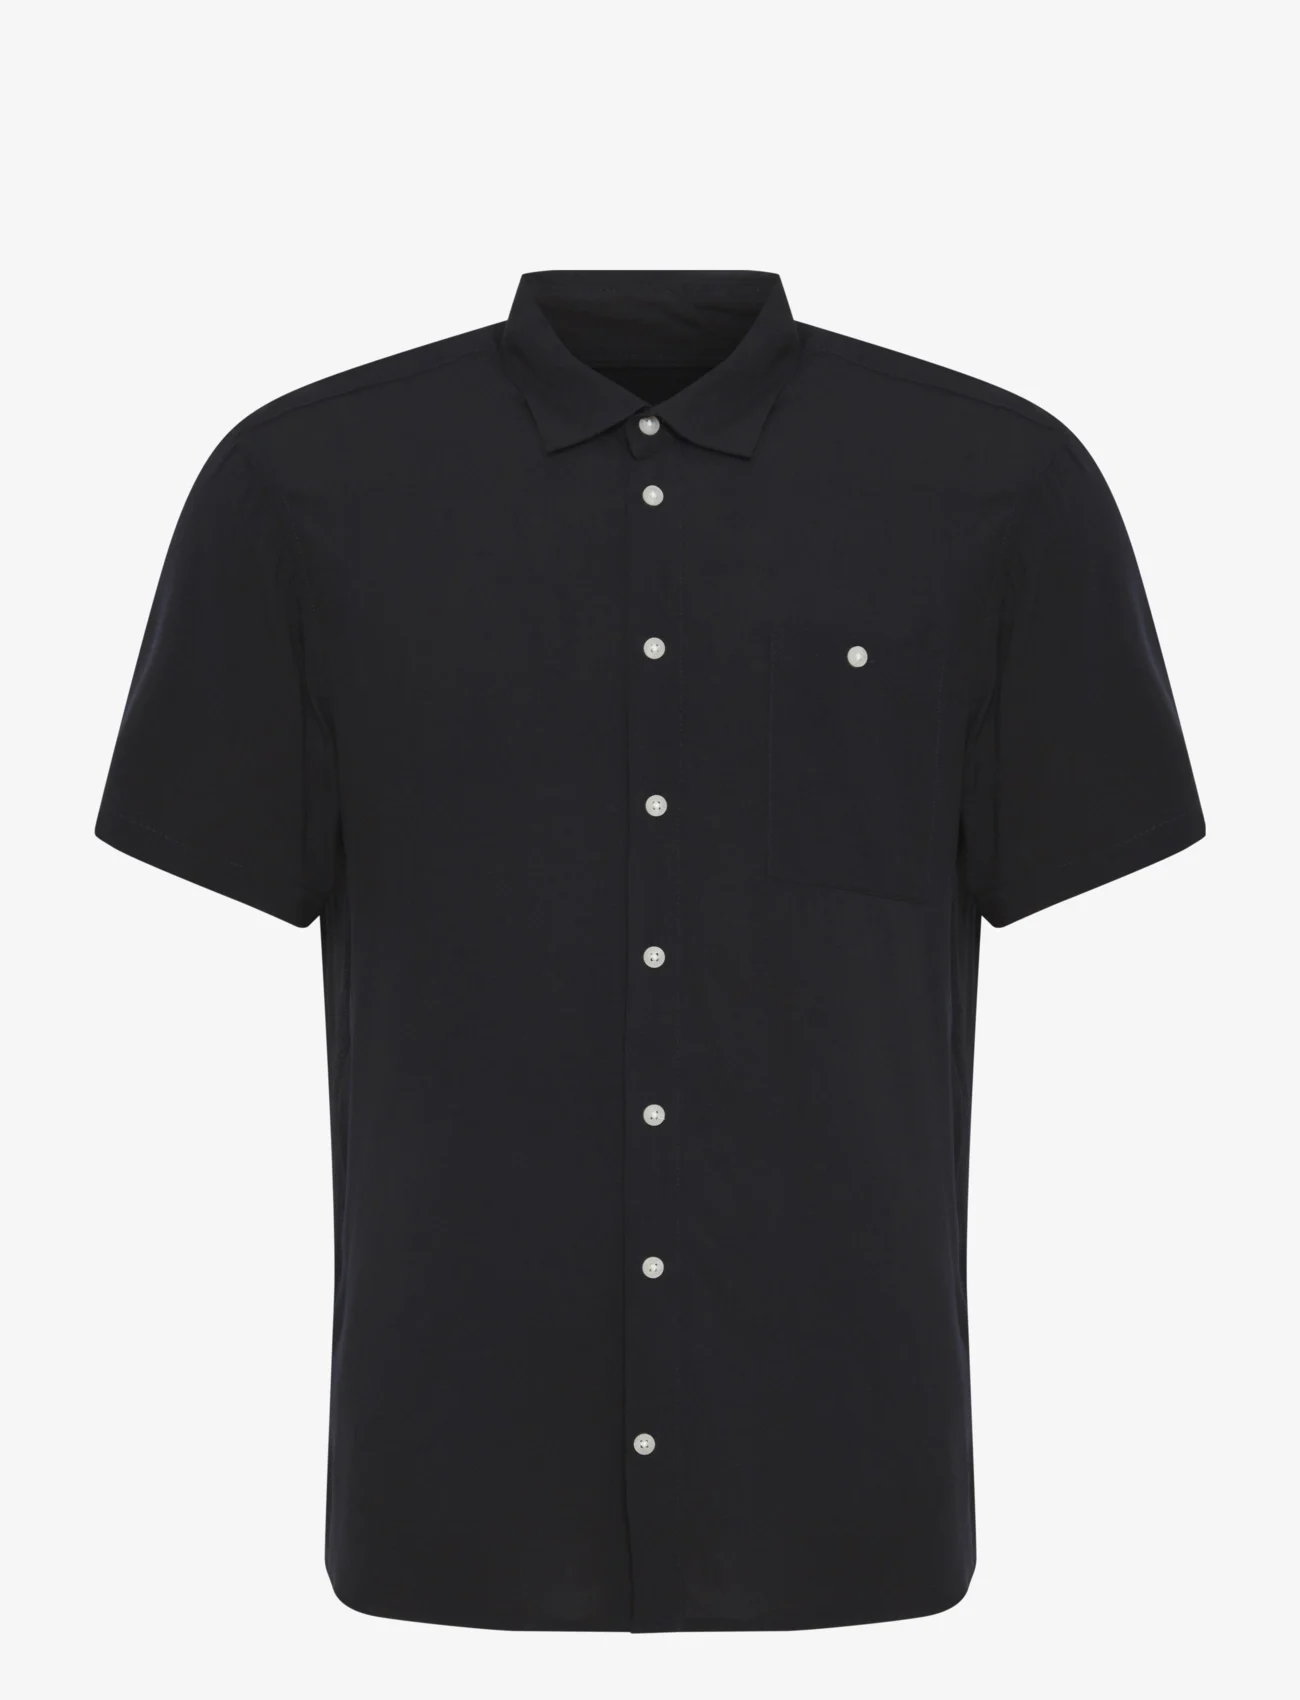 Blend - Shirt - zemākās cenas - black - 0